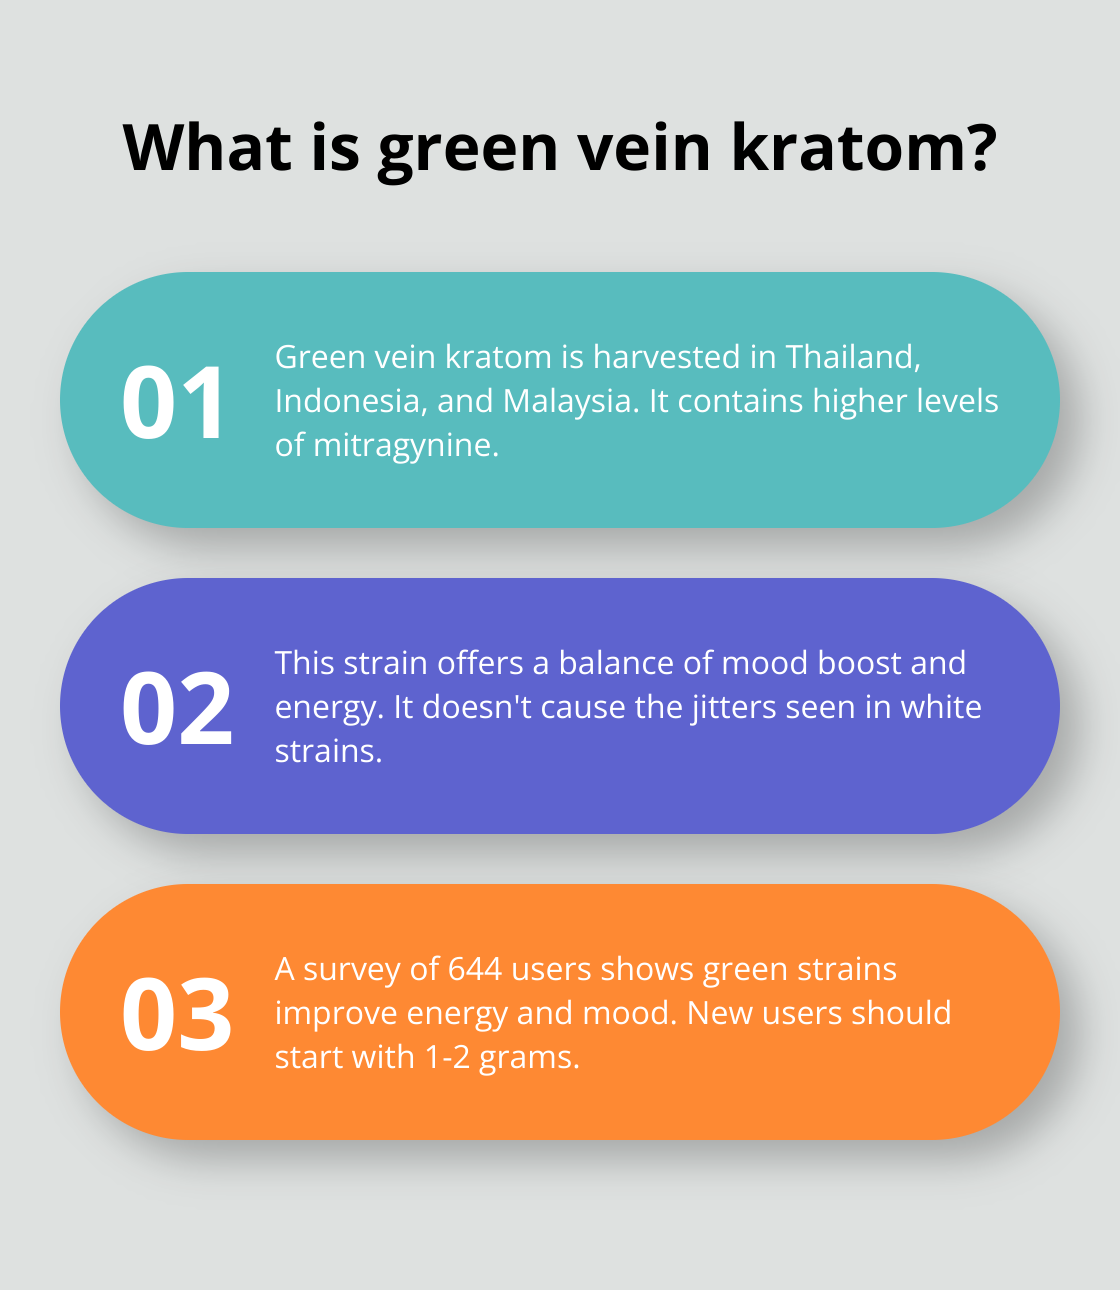 Fact - What is green vein kratom?